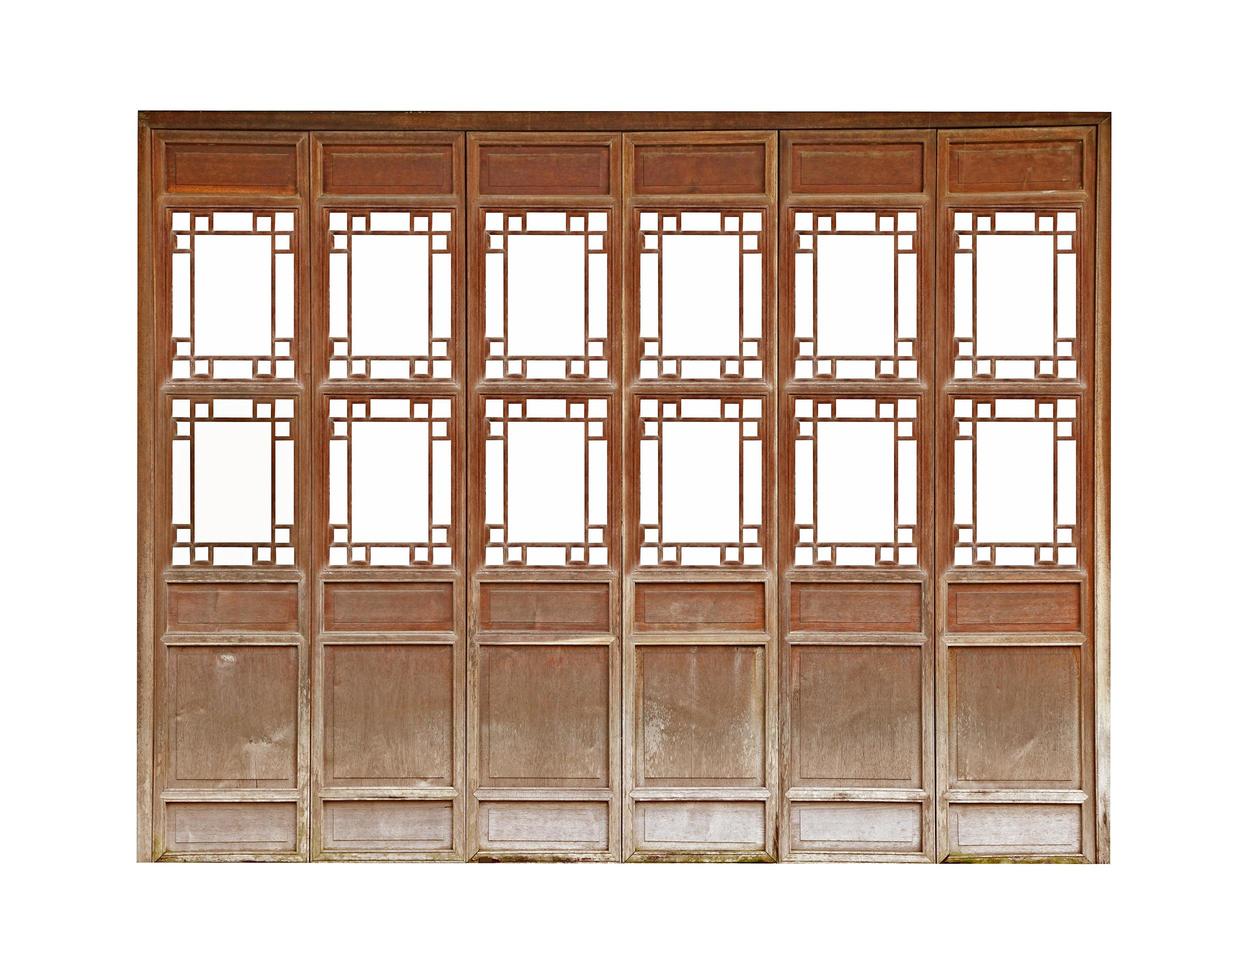 Vieille porte en bois chinoise sur fond blanc photo